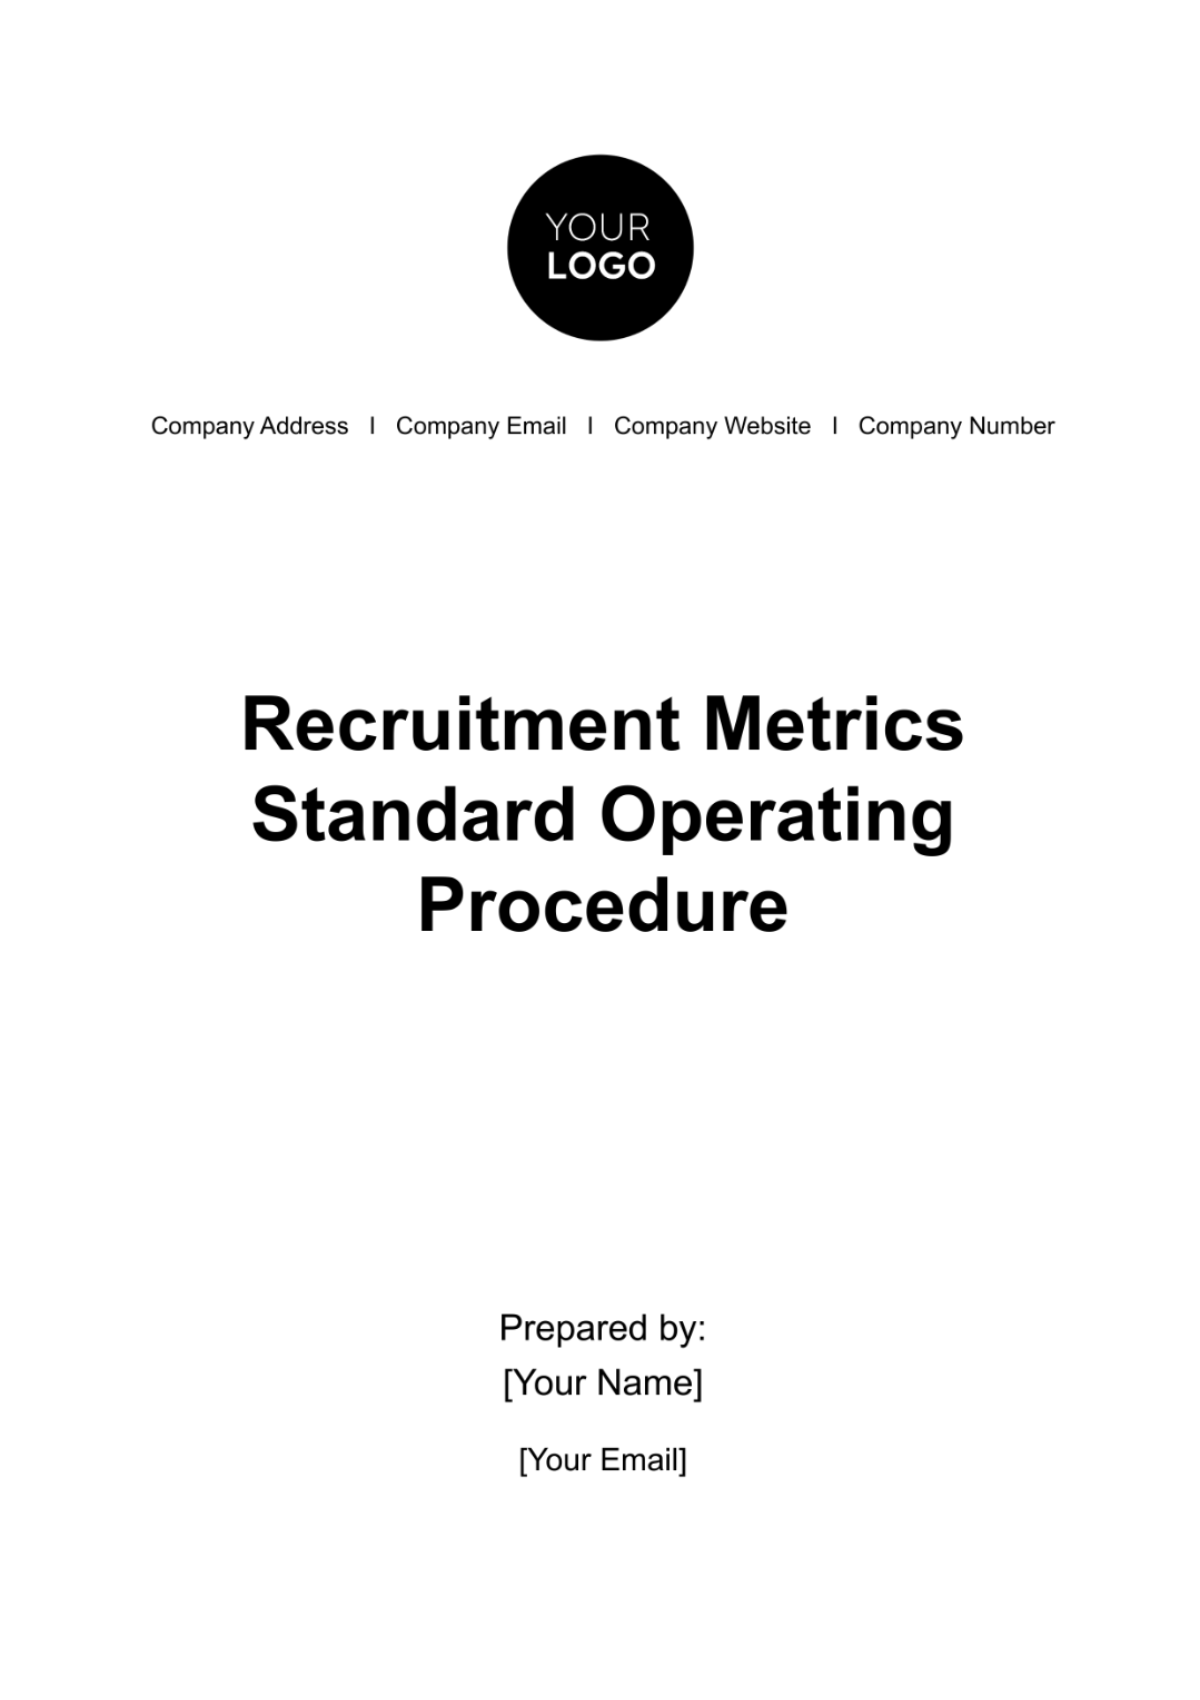 Free Recruitment Metrics SOP HR Template